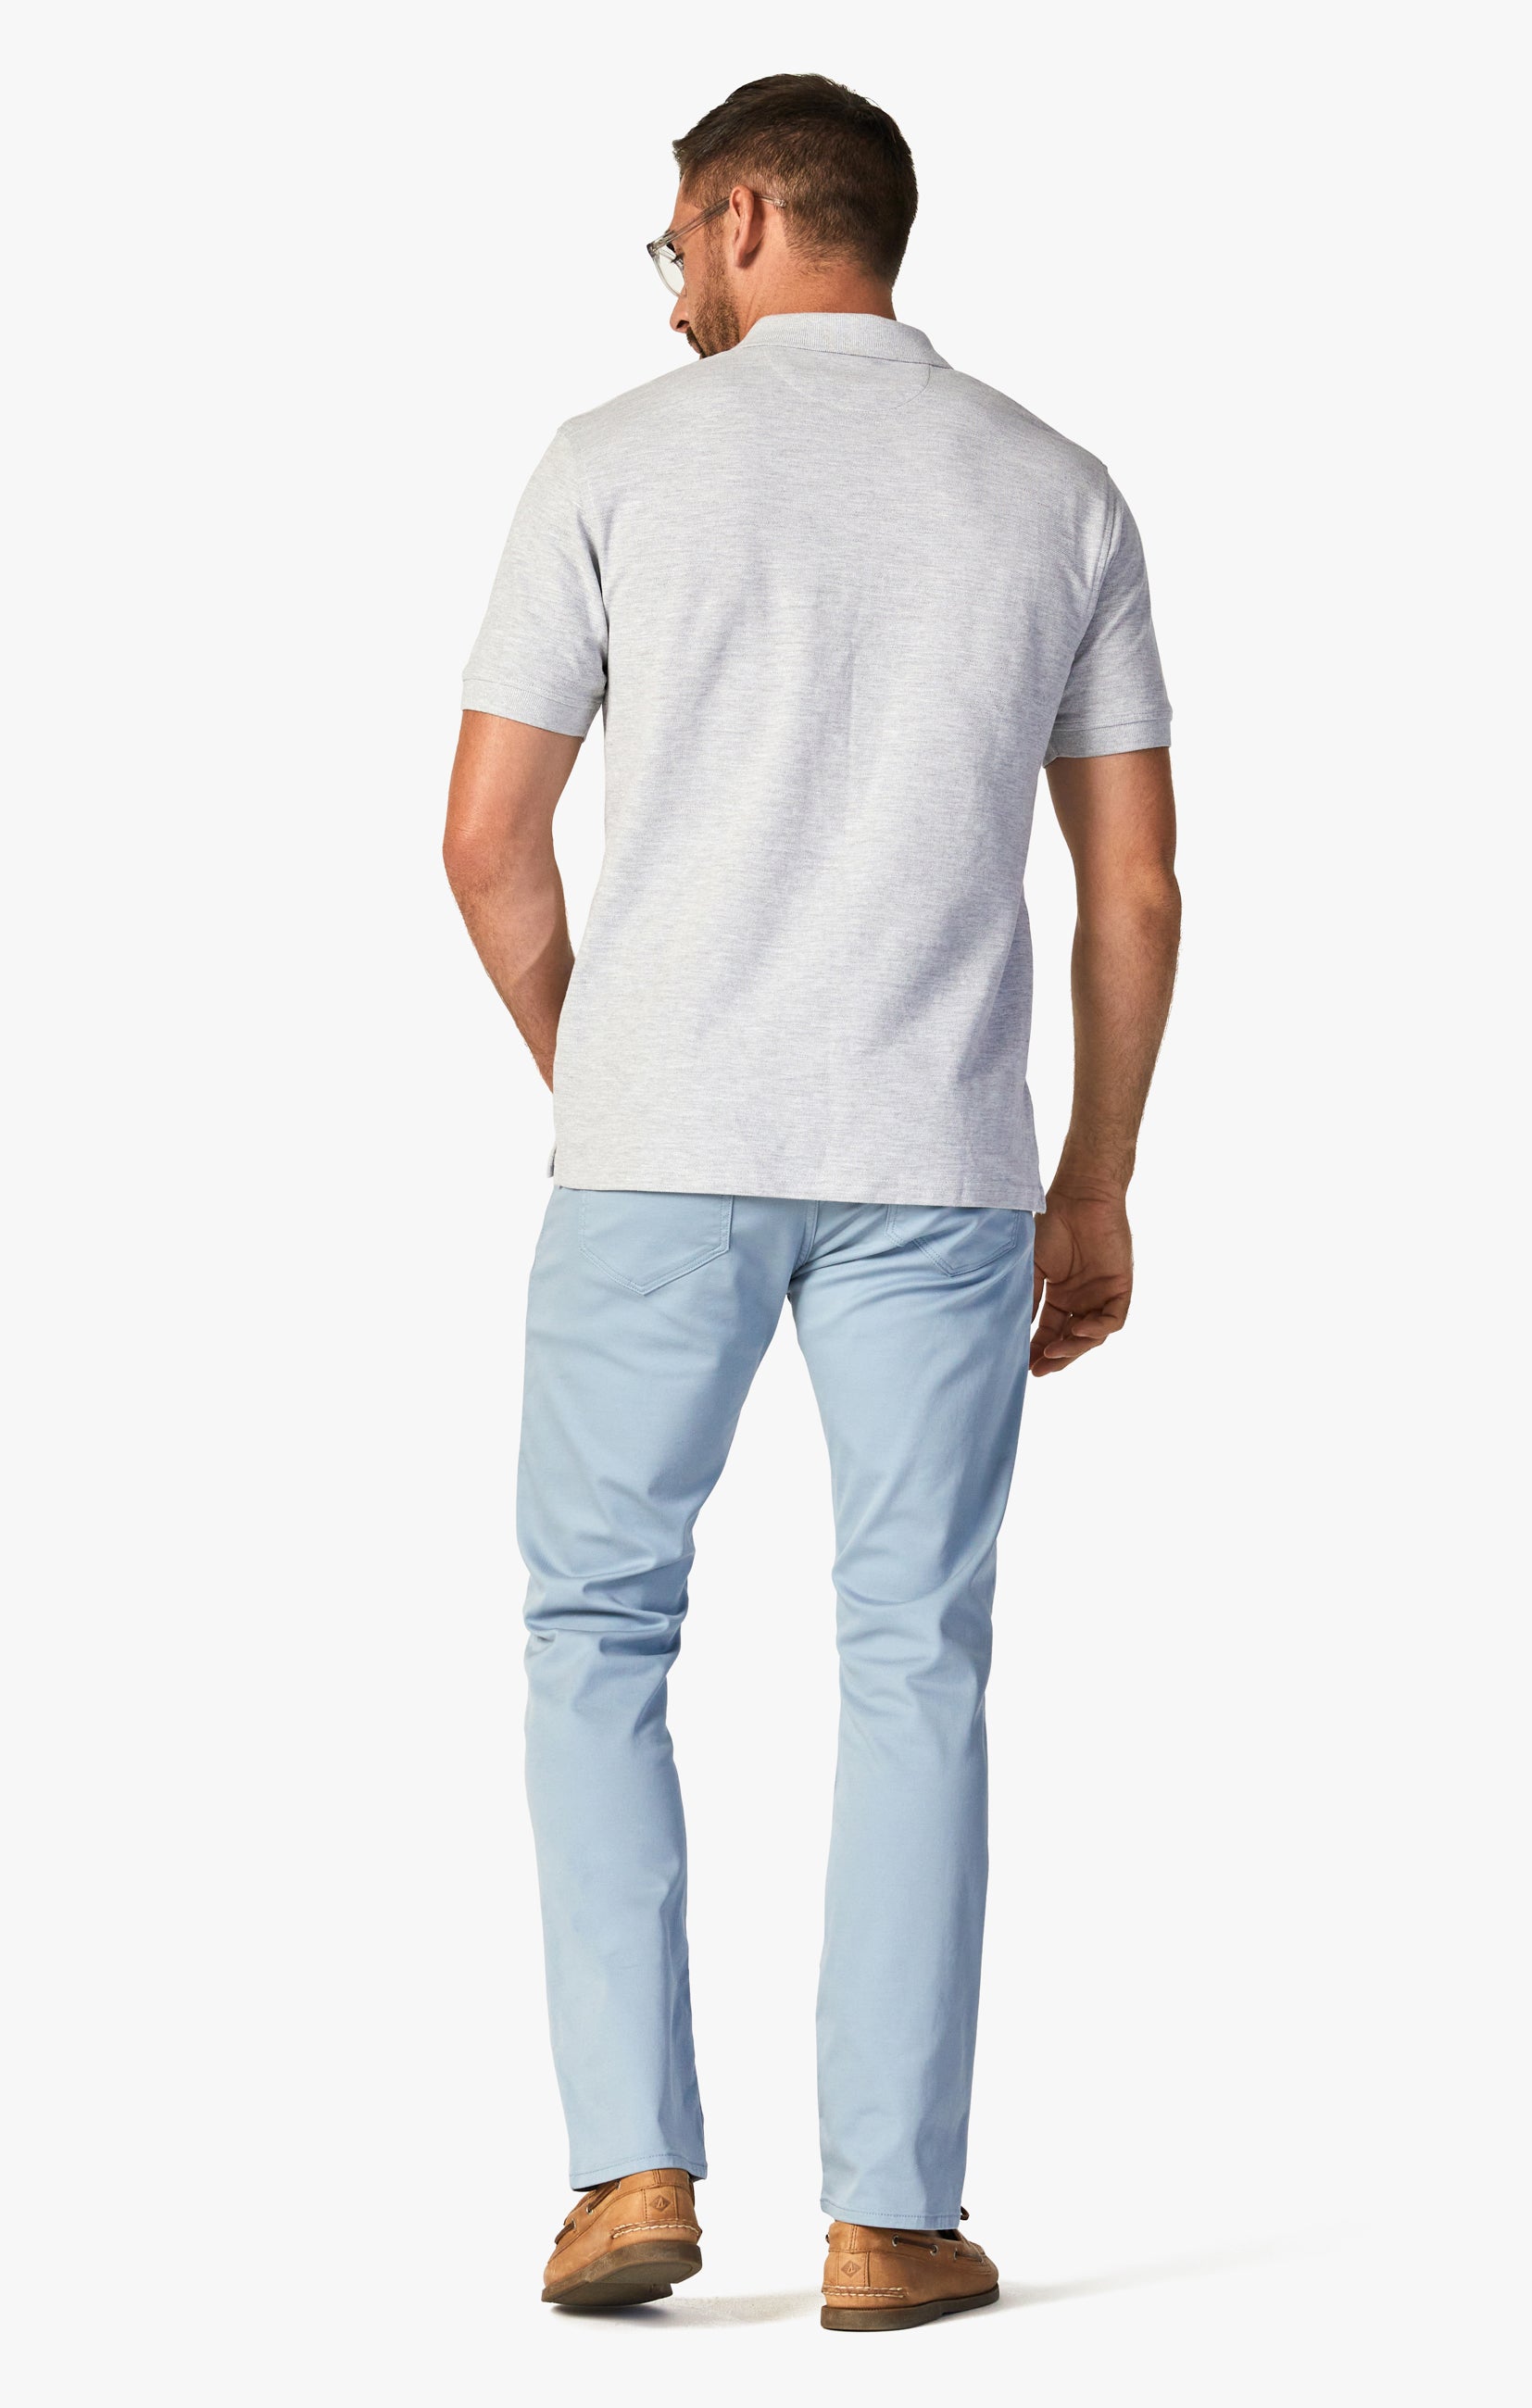 jeans men - Buy jeans men Online Starting at Just ₹307 | Meesho